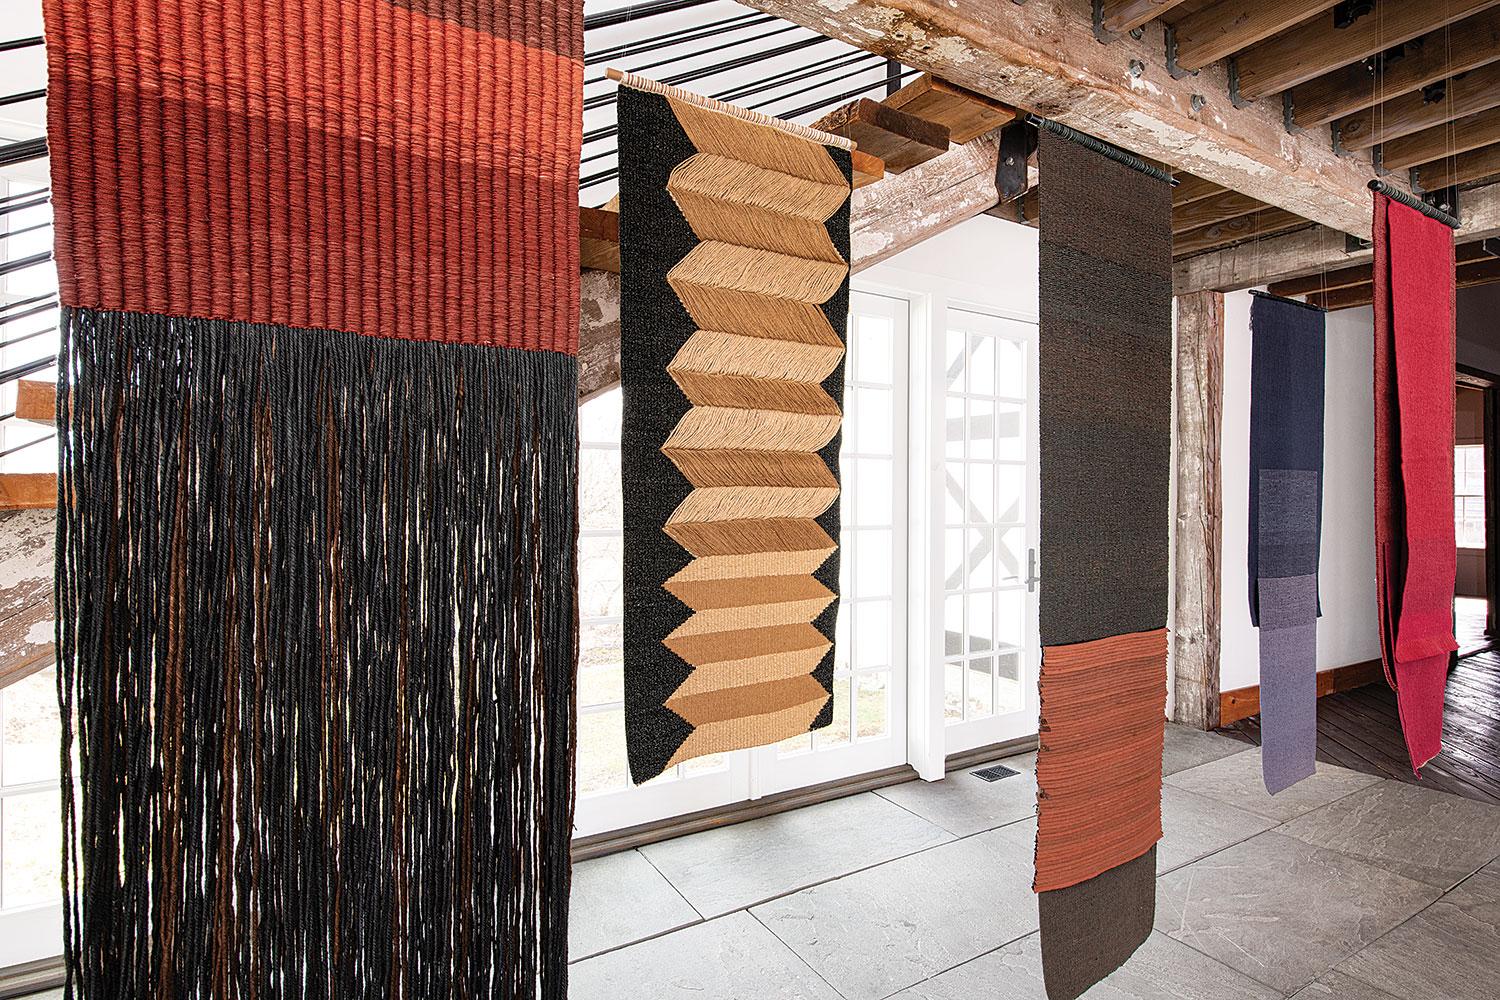 This handwoven contemporary textile sculpture, Tonos Rojos, was done by Chilean fiber artist, Carolina Yrarrázaval (b. 1960). Yrarrázaval explains her inspiration and technique: 

